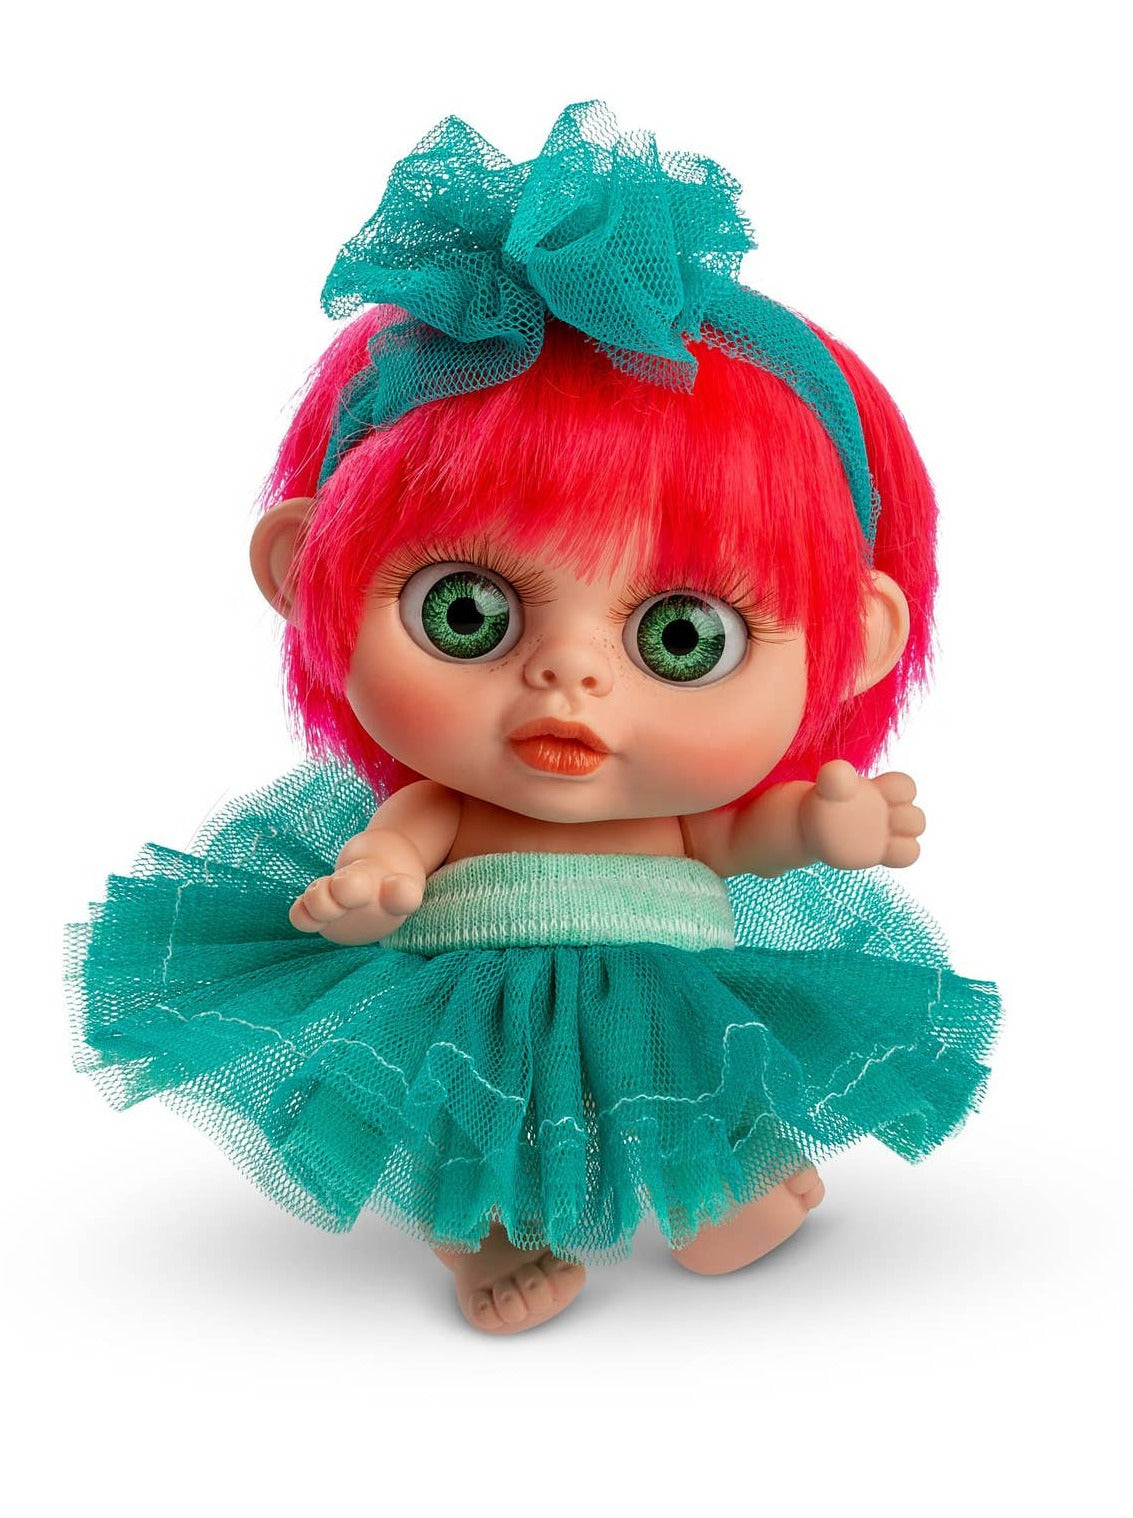 Iridessa - Baby Biggers Doll with Pink hair